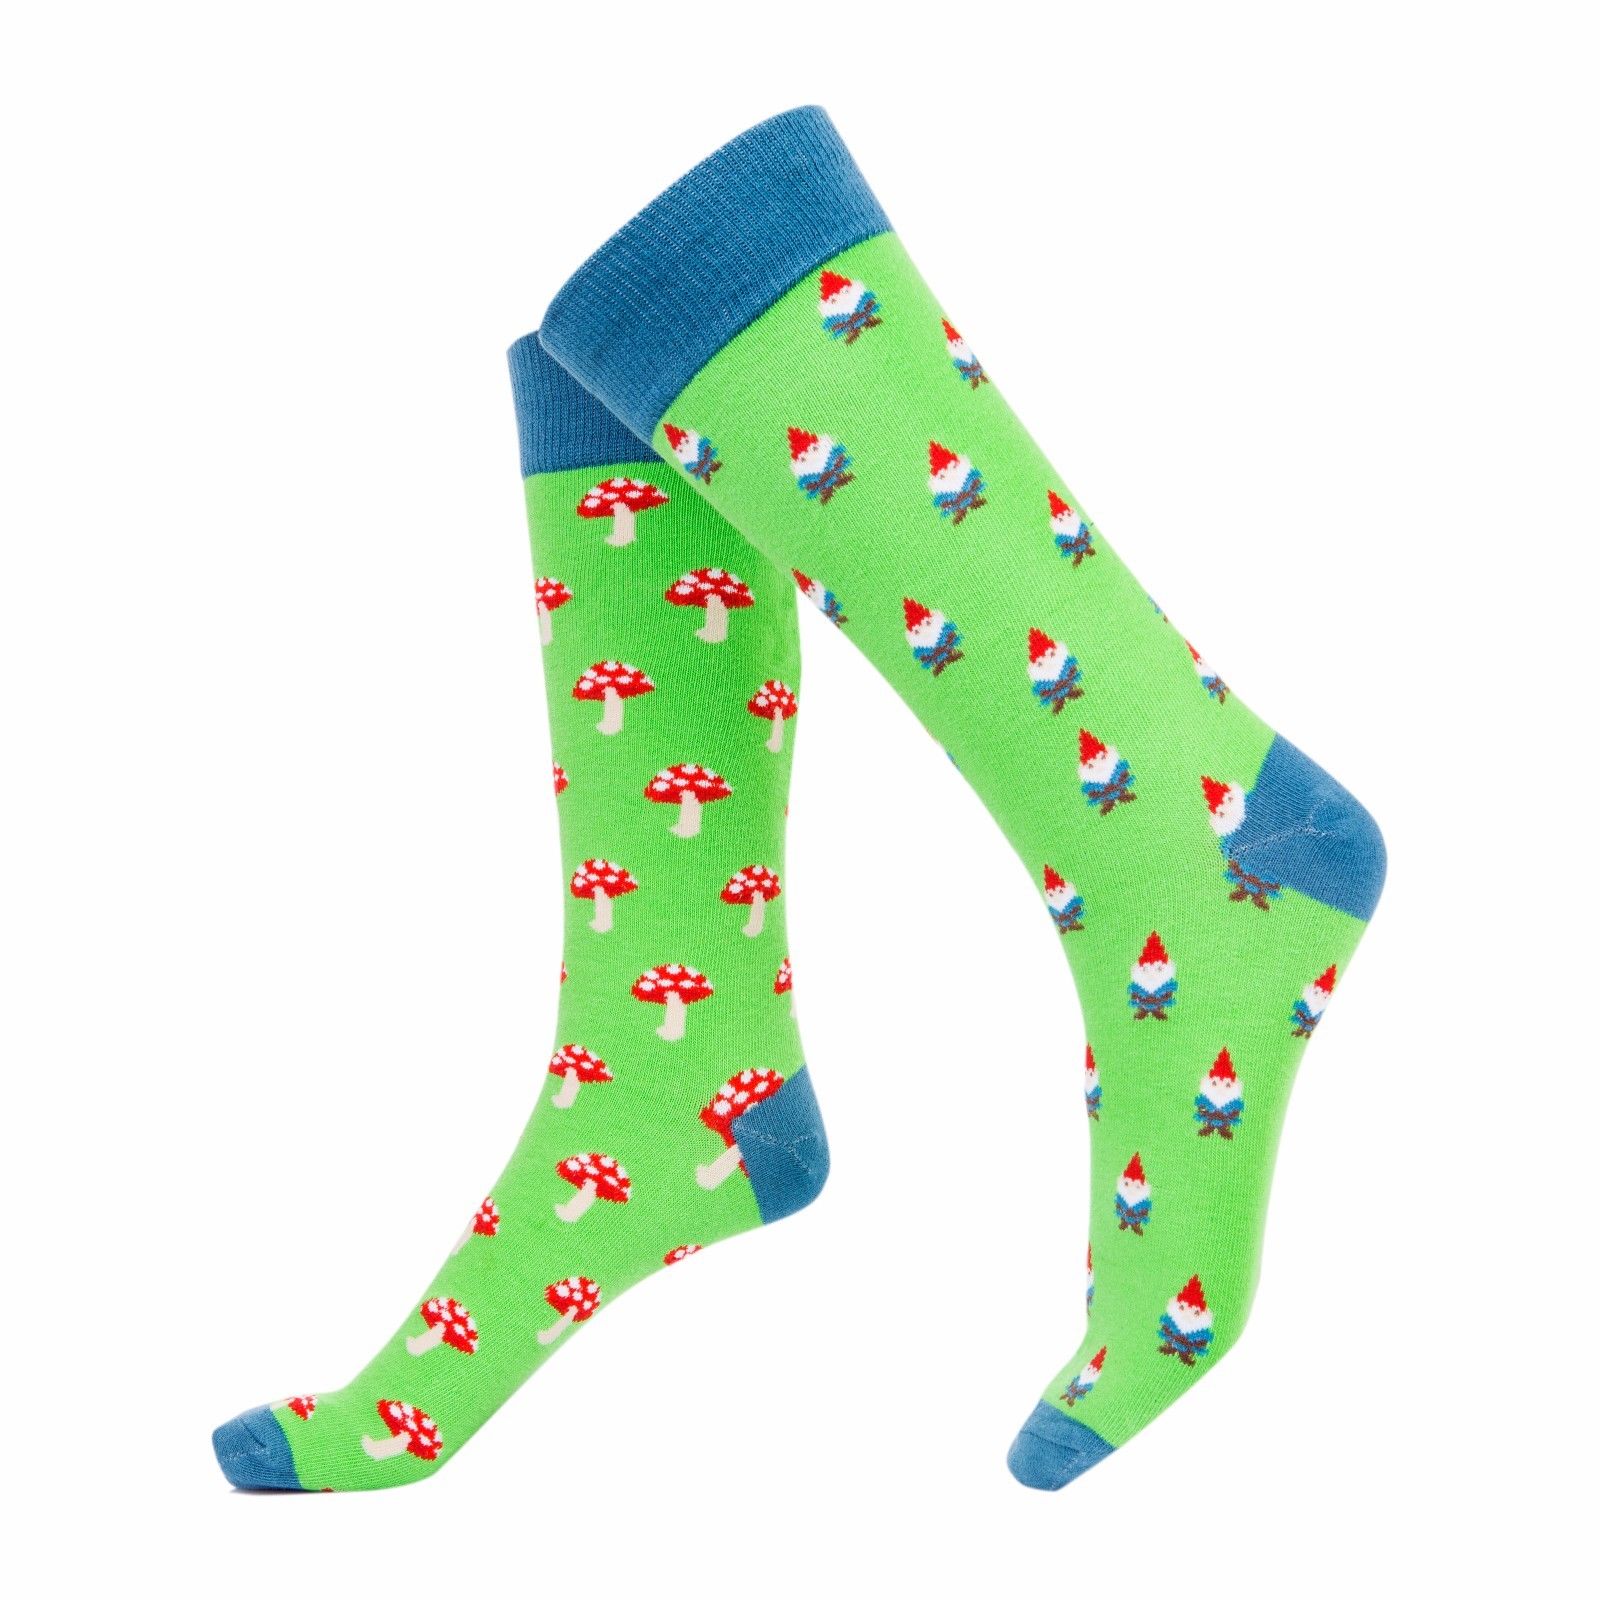 Funny Novelty Gnomes Odd Socks - Fun Wacky Funky Quality Cool ...